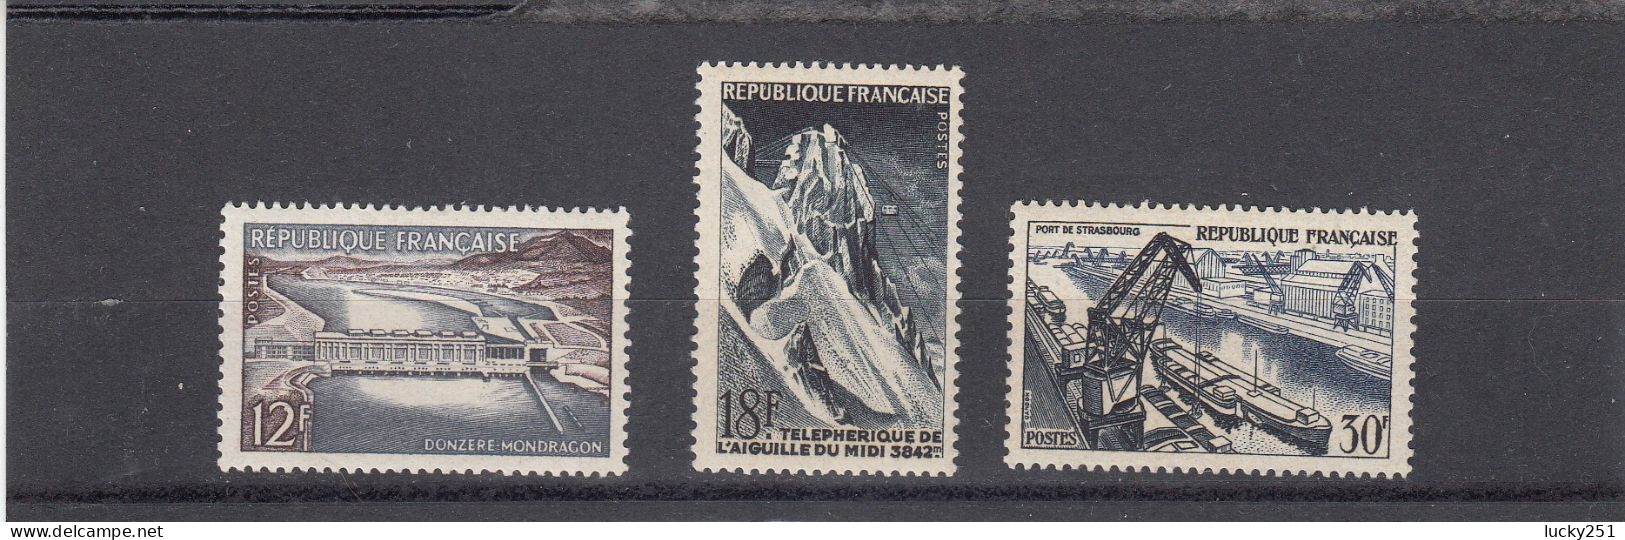 France - Année 1956 - Neuf** - N°1078/80** - Réalisations Techniques - Unused Stamps